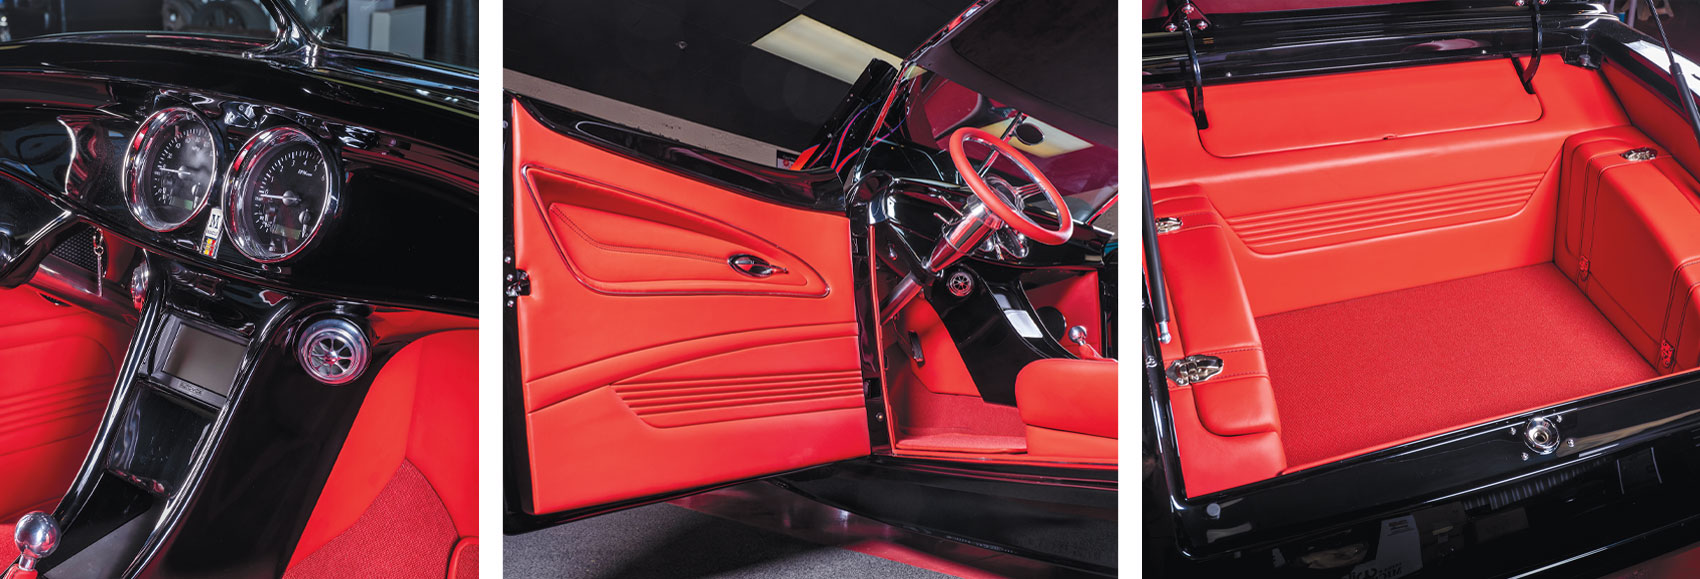 Ford Muroc Fenderless Roadster Engine red interior